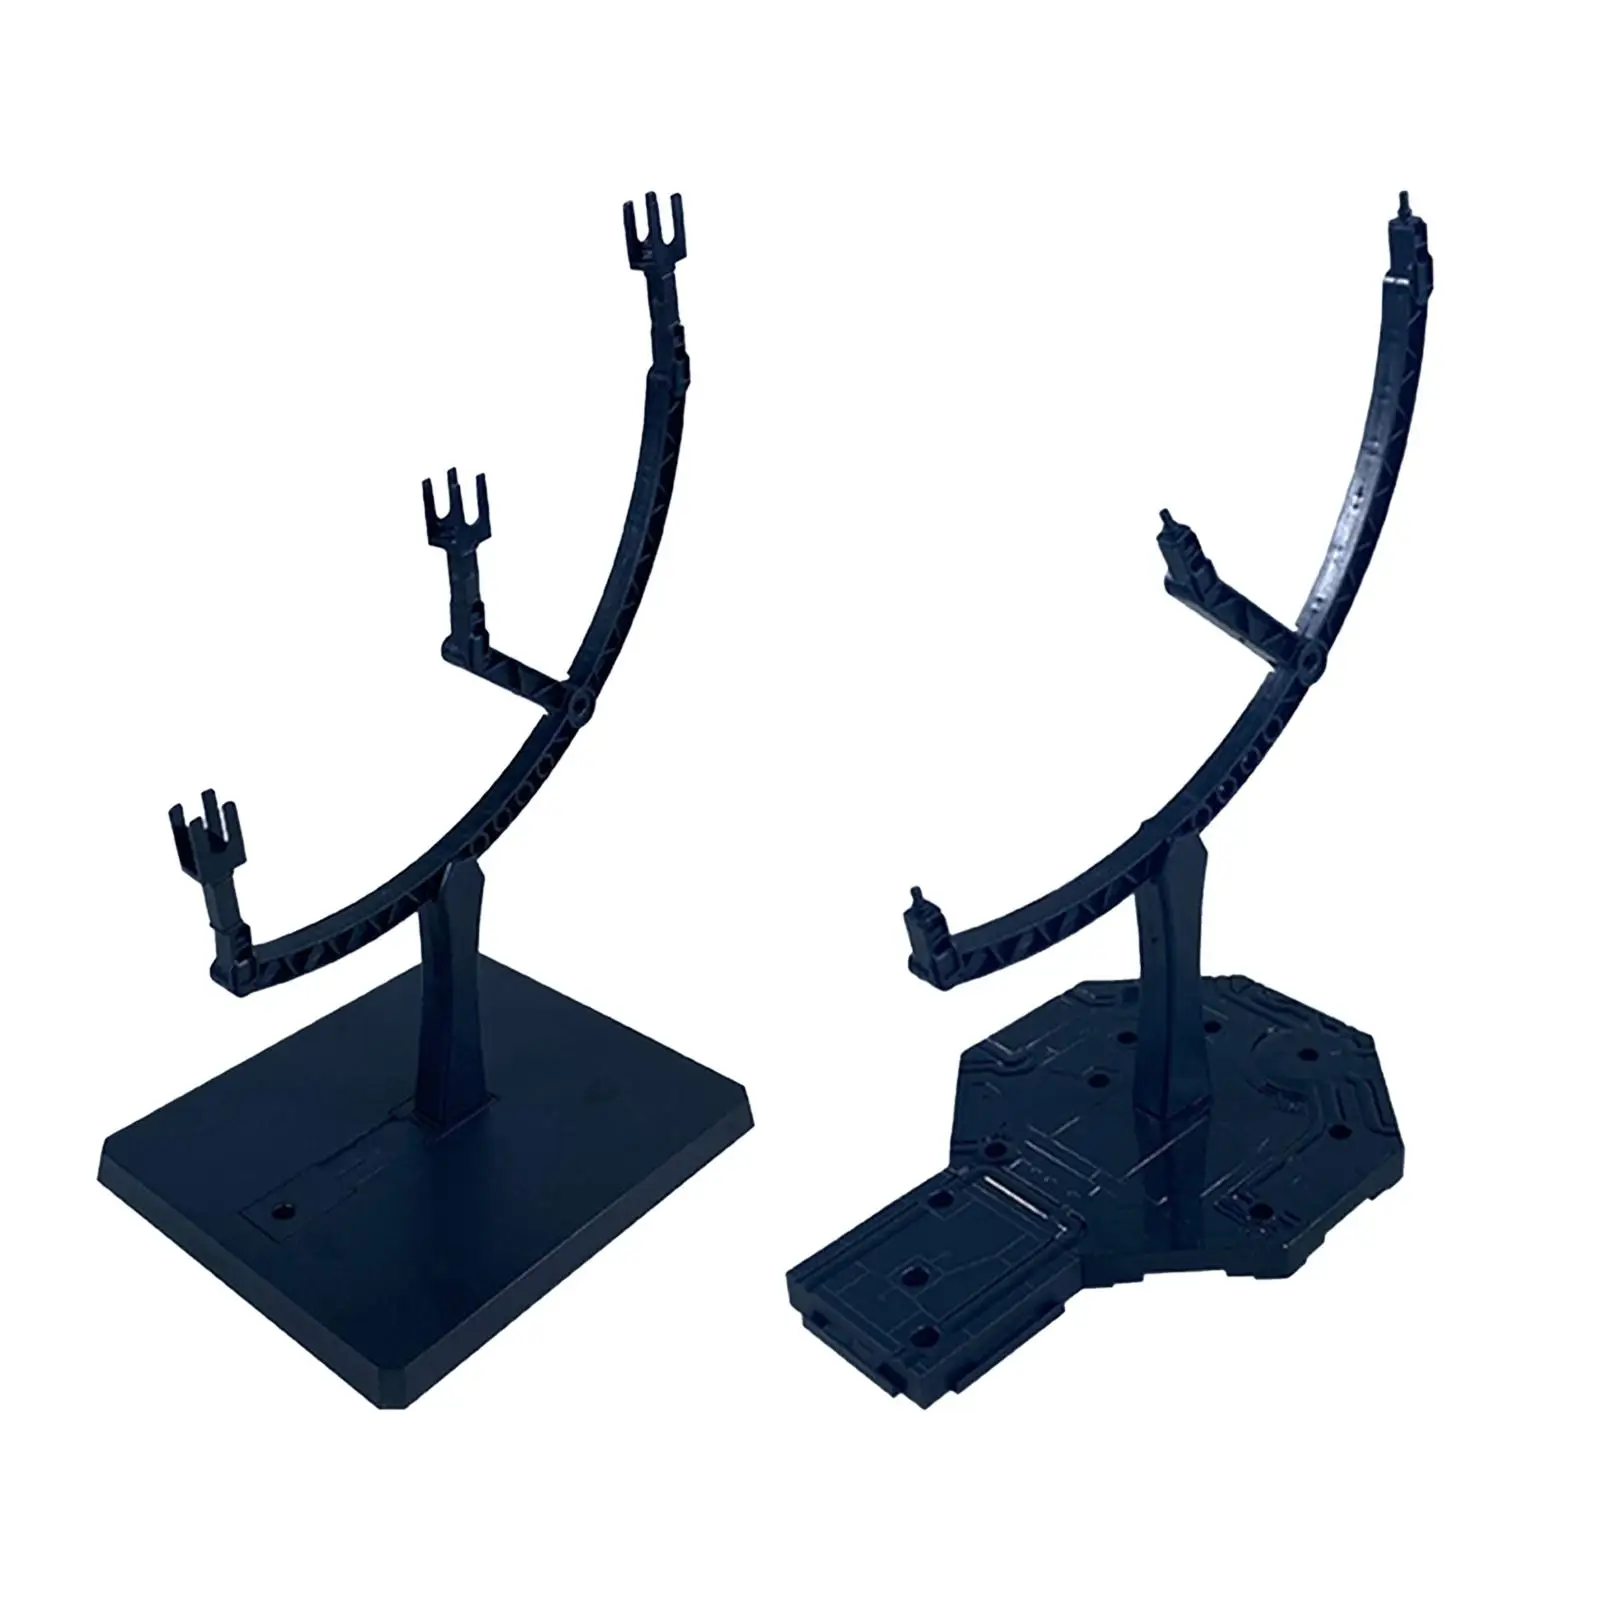 Action Figure Display Multifunction Lightweight Portable Rack Bracket for Hg MG Tabletop Bedroom Shelf Decorative